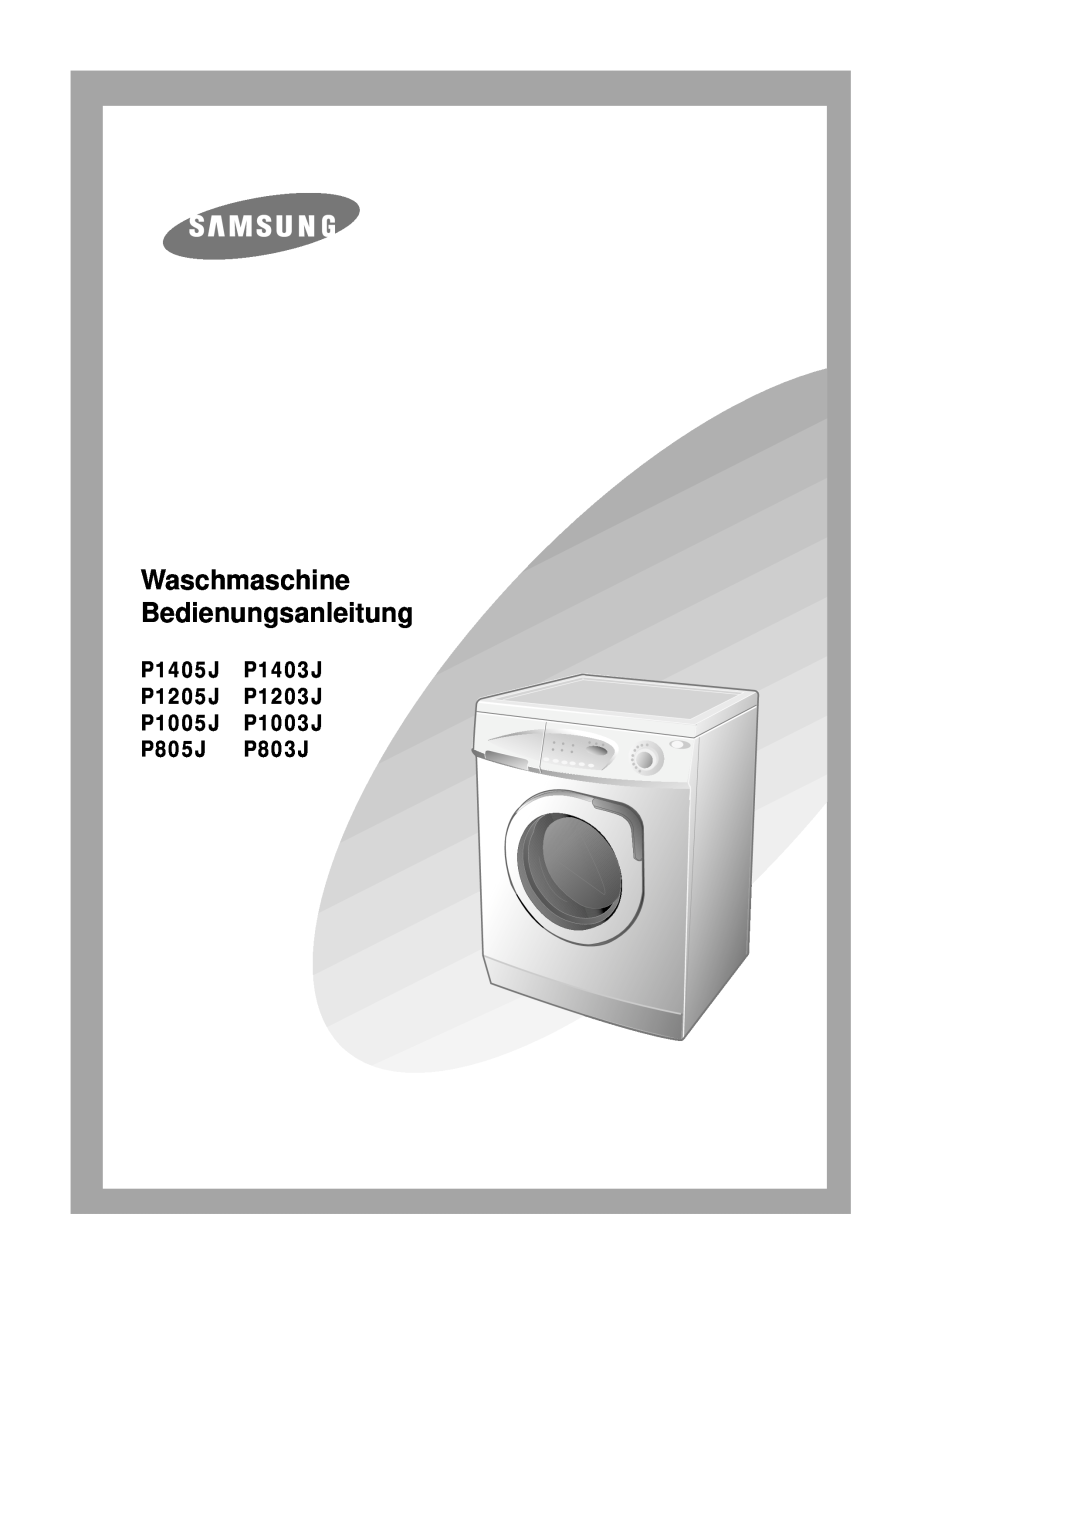 Samsung P1205JGW/XEG manual Waschmaschine Bedienungsanleitung, P1405J P1403J P1205J P1203J P1005J P1003J P805J P803J 